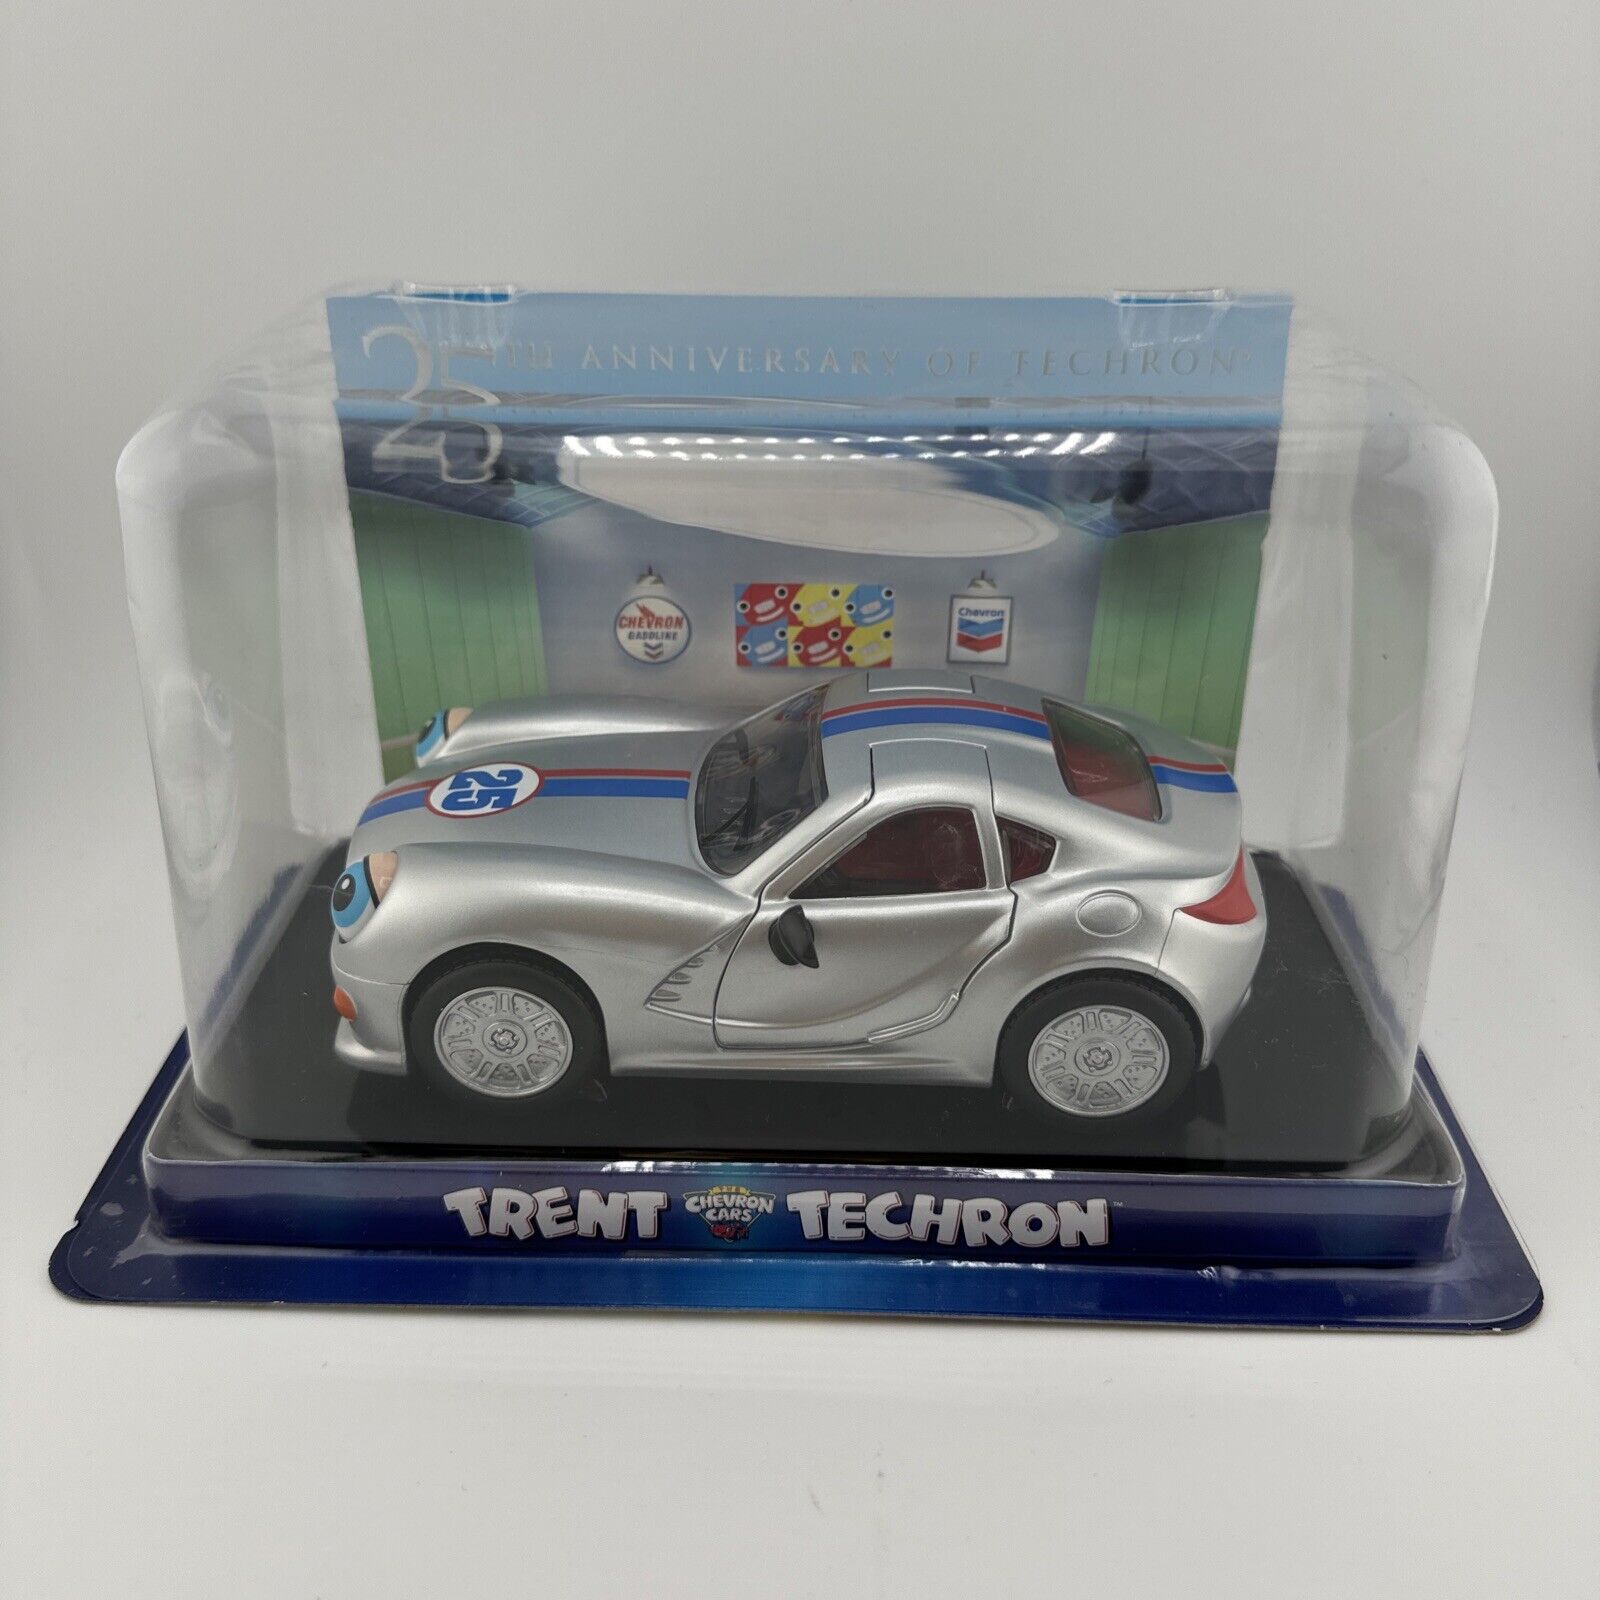 CHEVRON CAR Trent Techron 25th Year Anniversary Limited Edition BRAND NEW SEALED